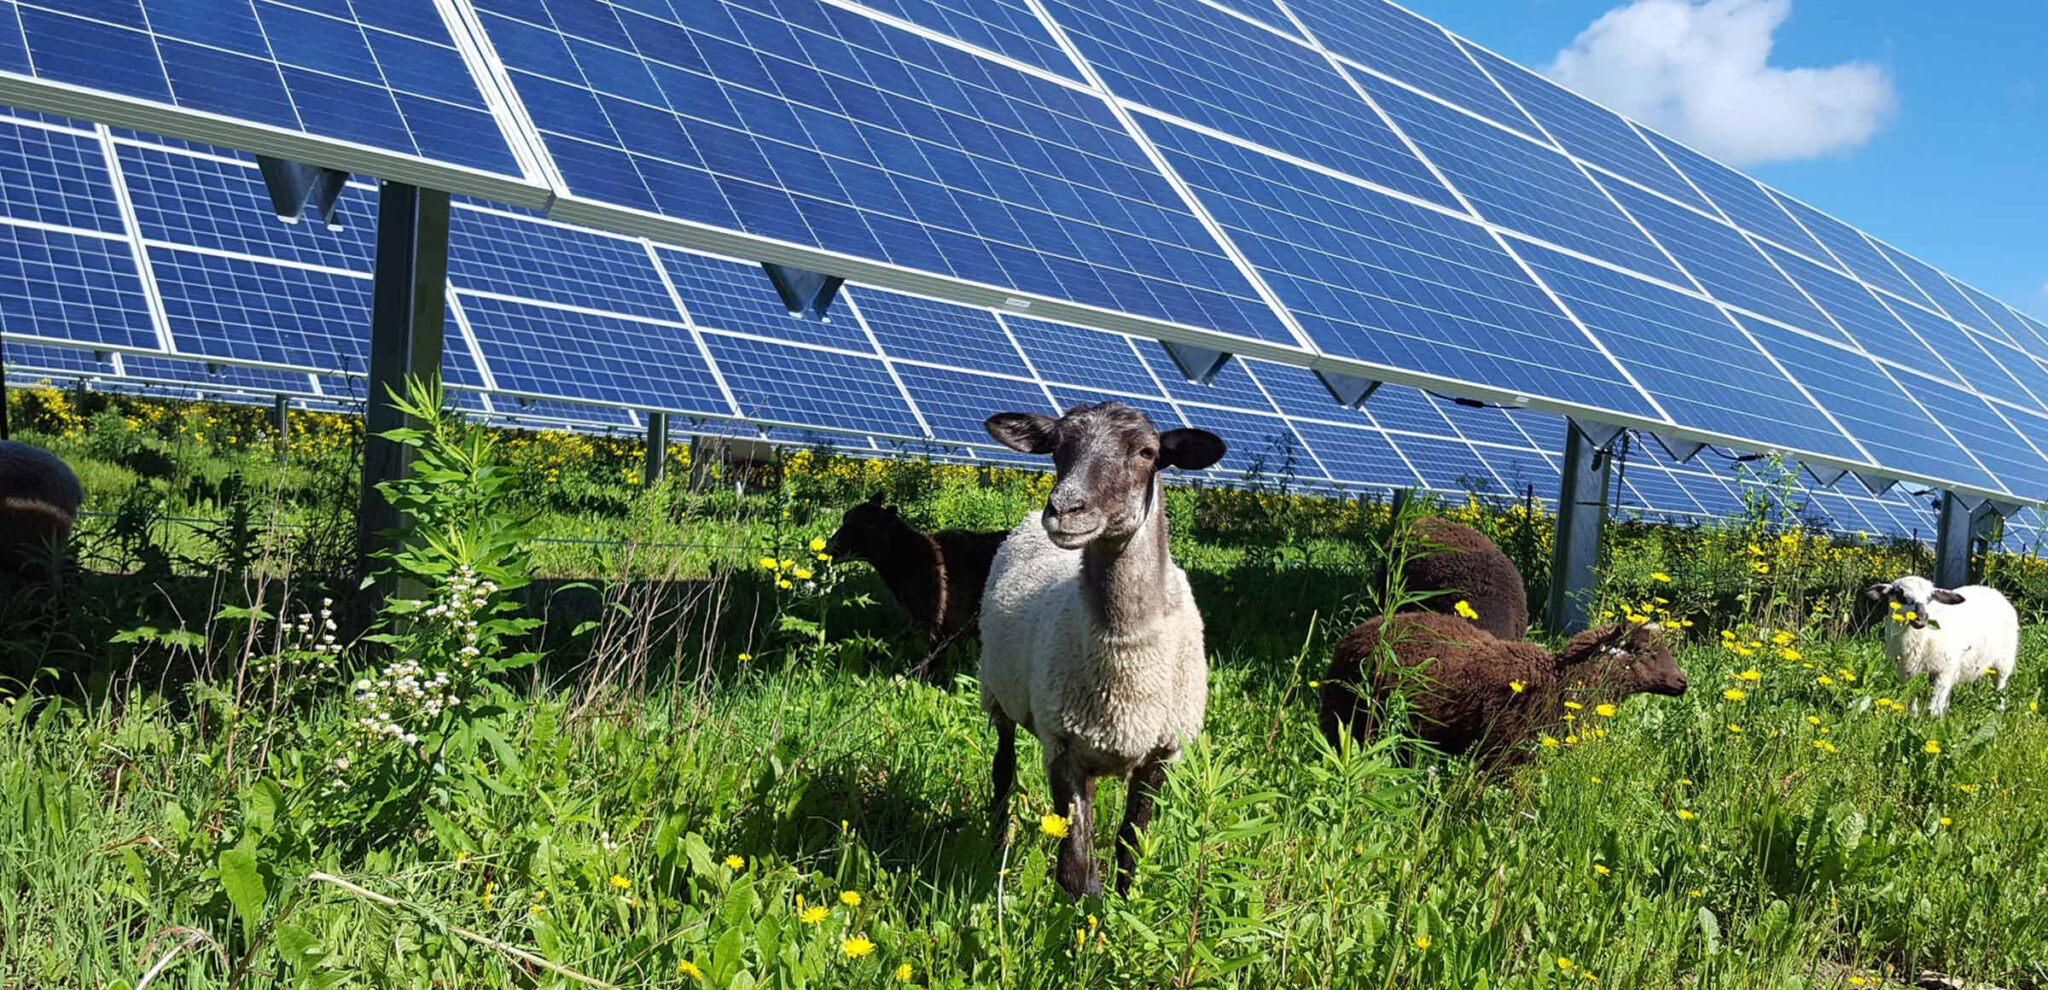 Solar for Energy, Habitat for Life: How Photovoltaic Plants Enhance Biodiversity